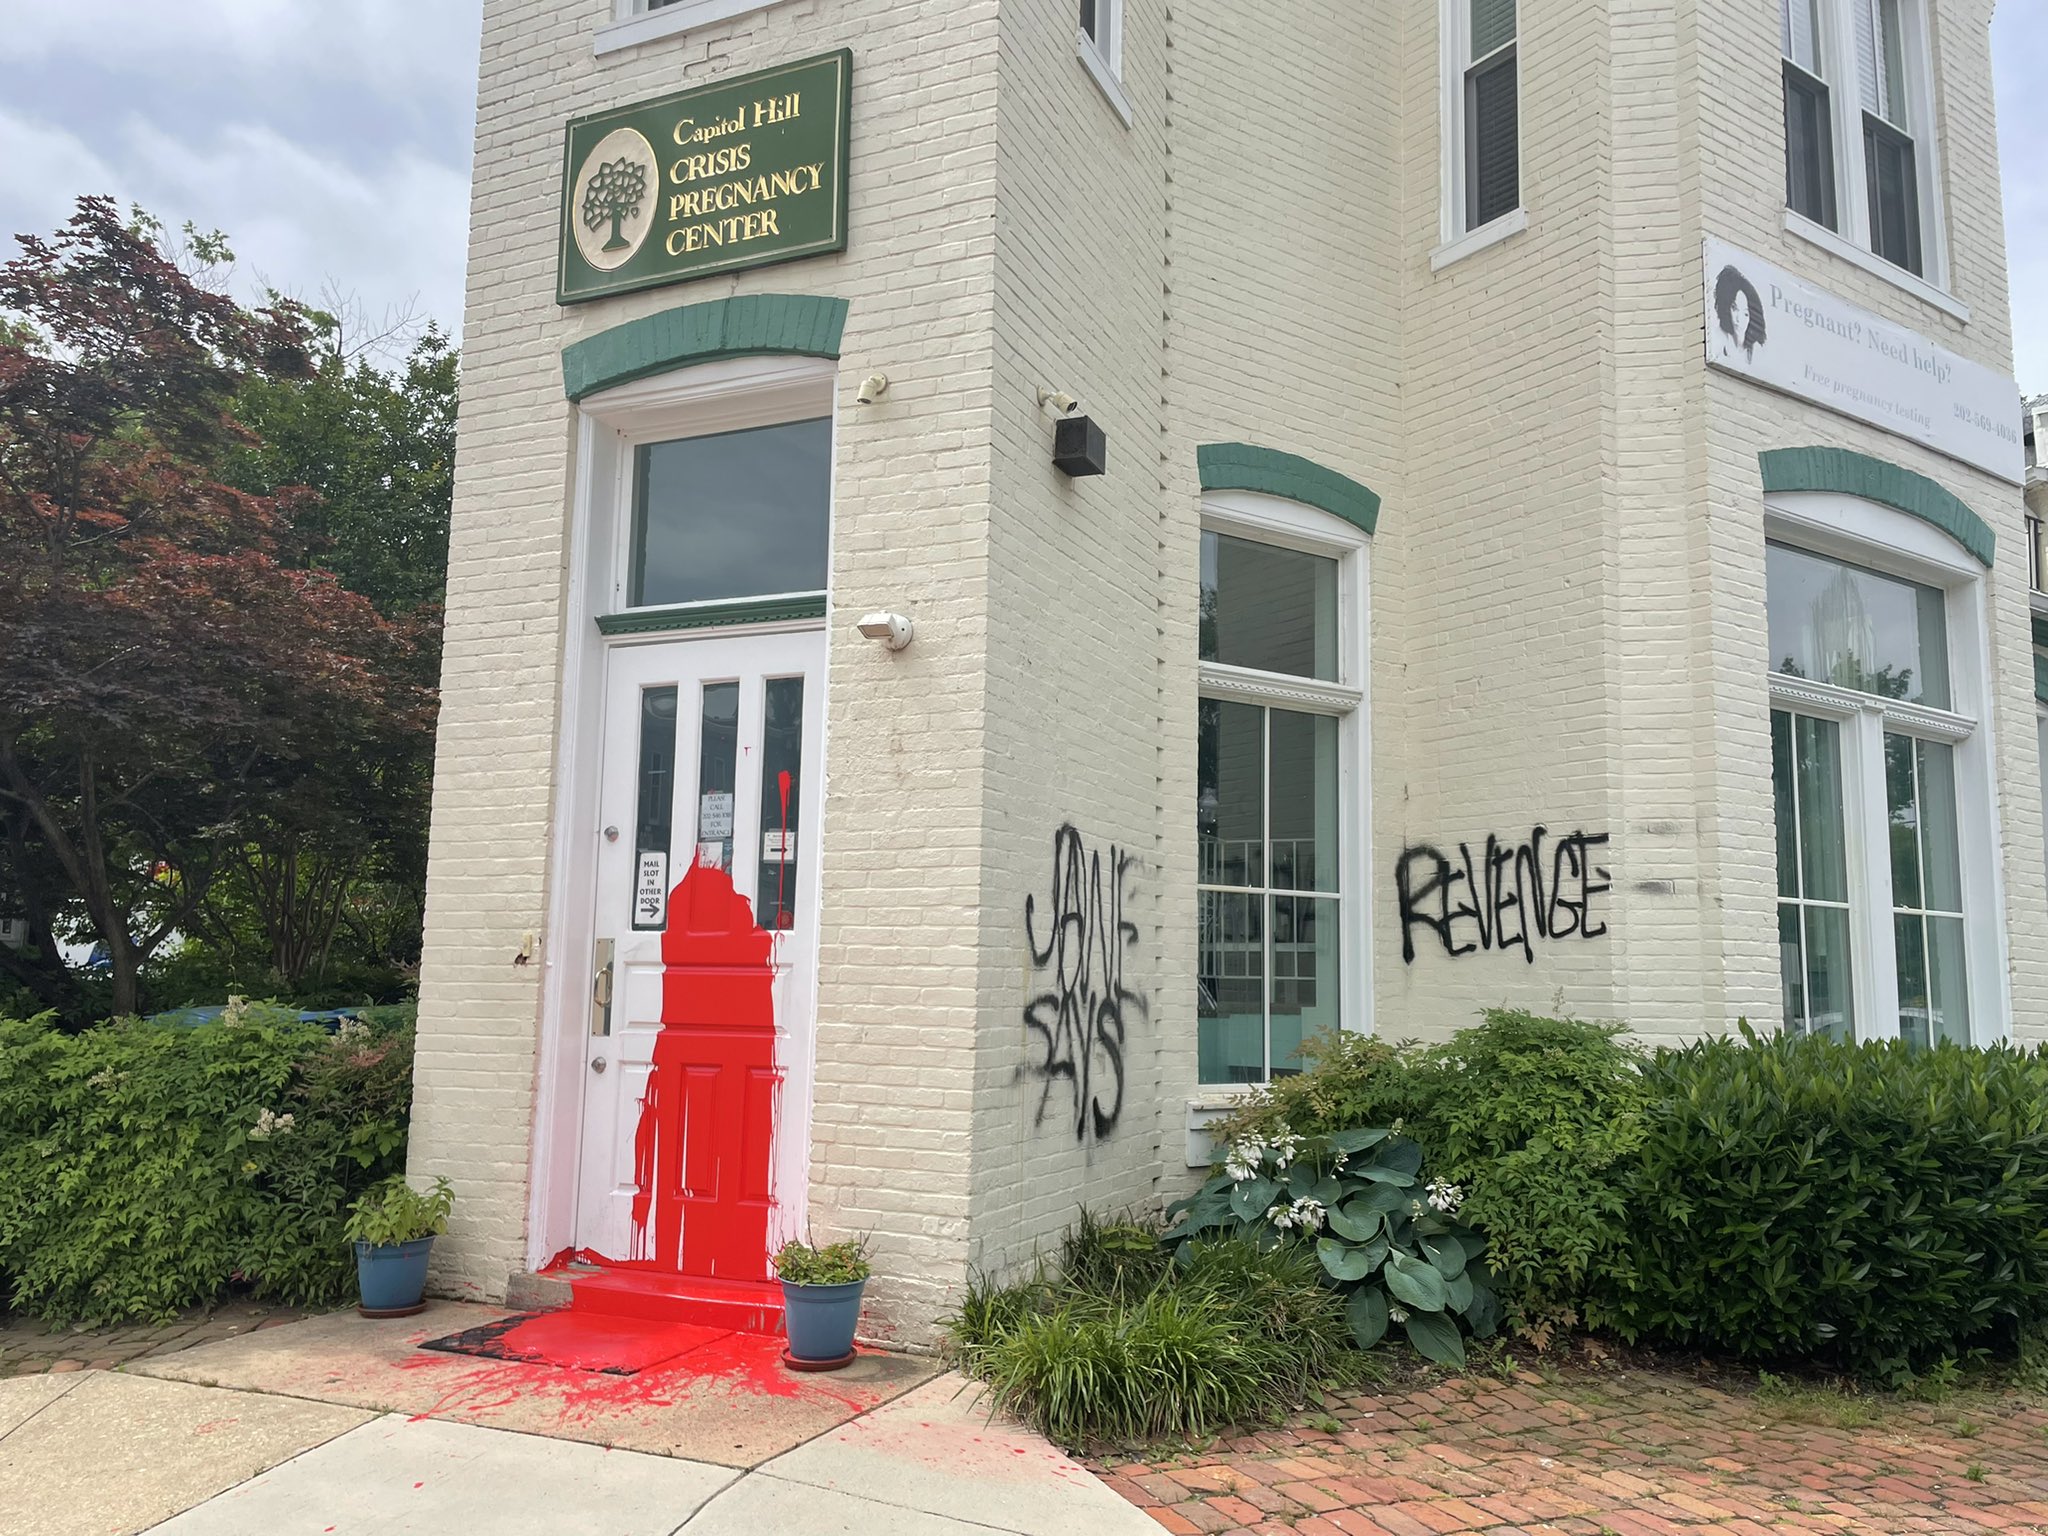 Abortion Activists Trash Pregnancy Center: Dump Paint on Door, Egg Windows, Write "Revenge" on Wall - LifeNews.com